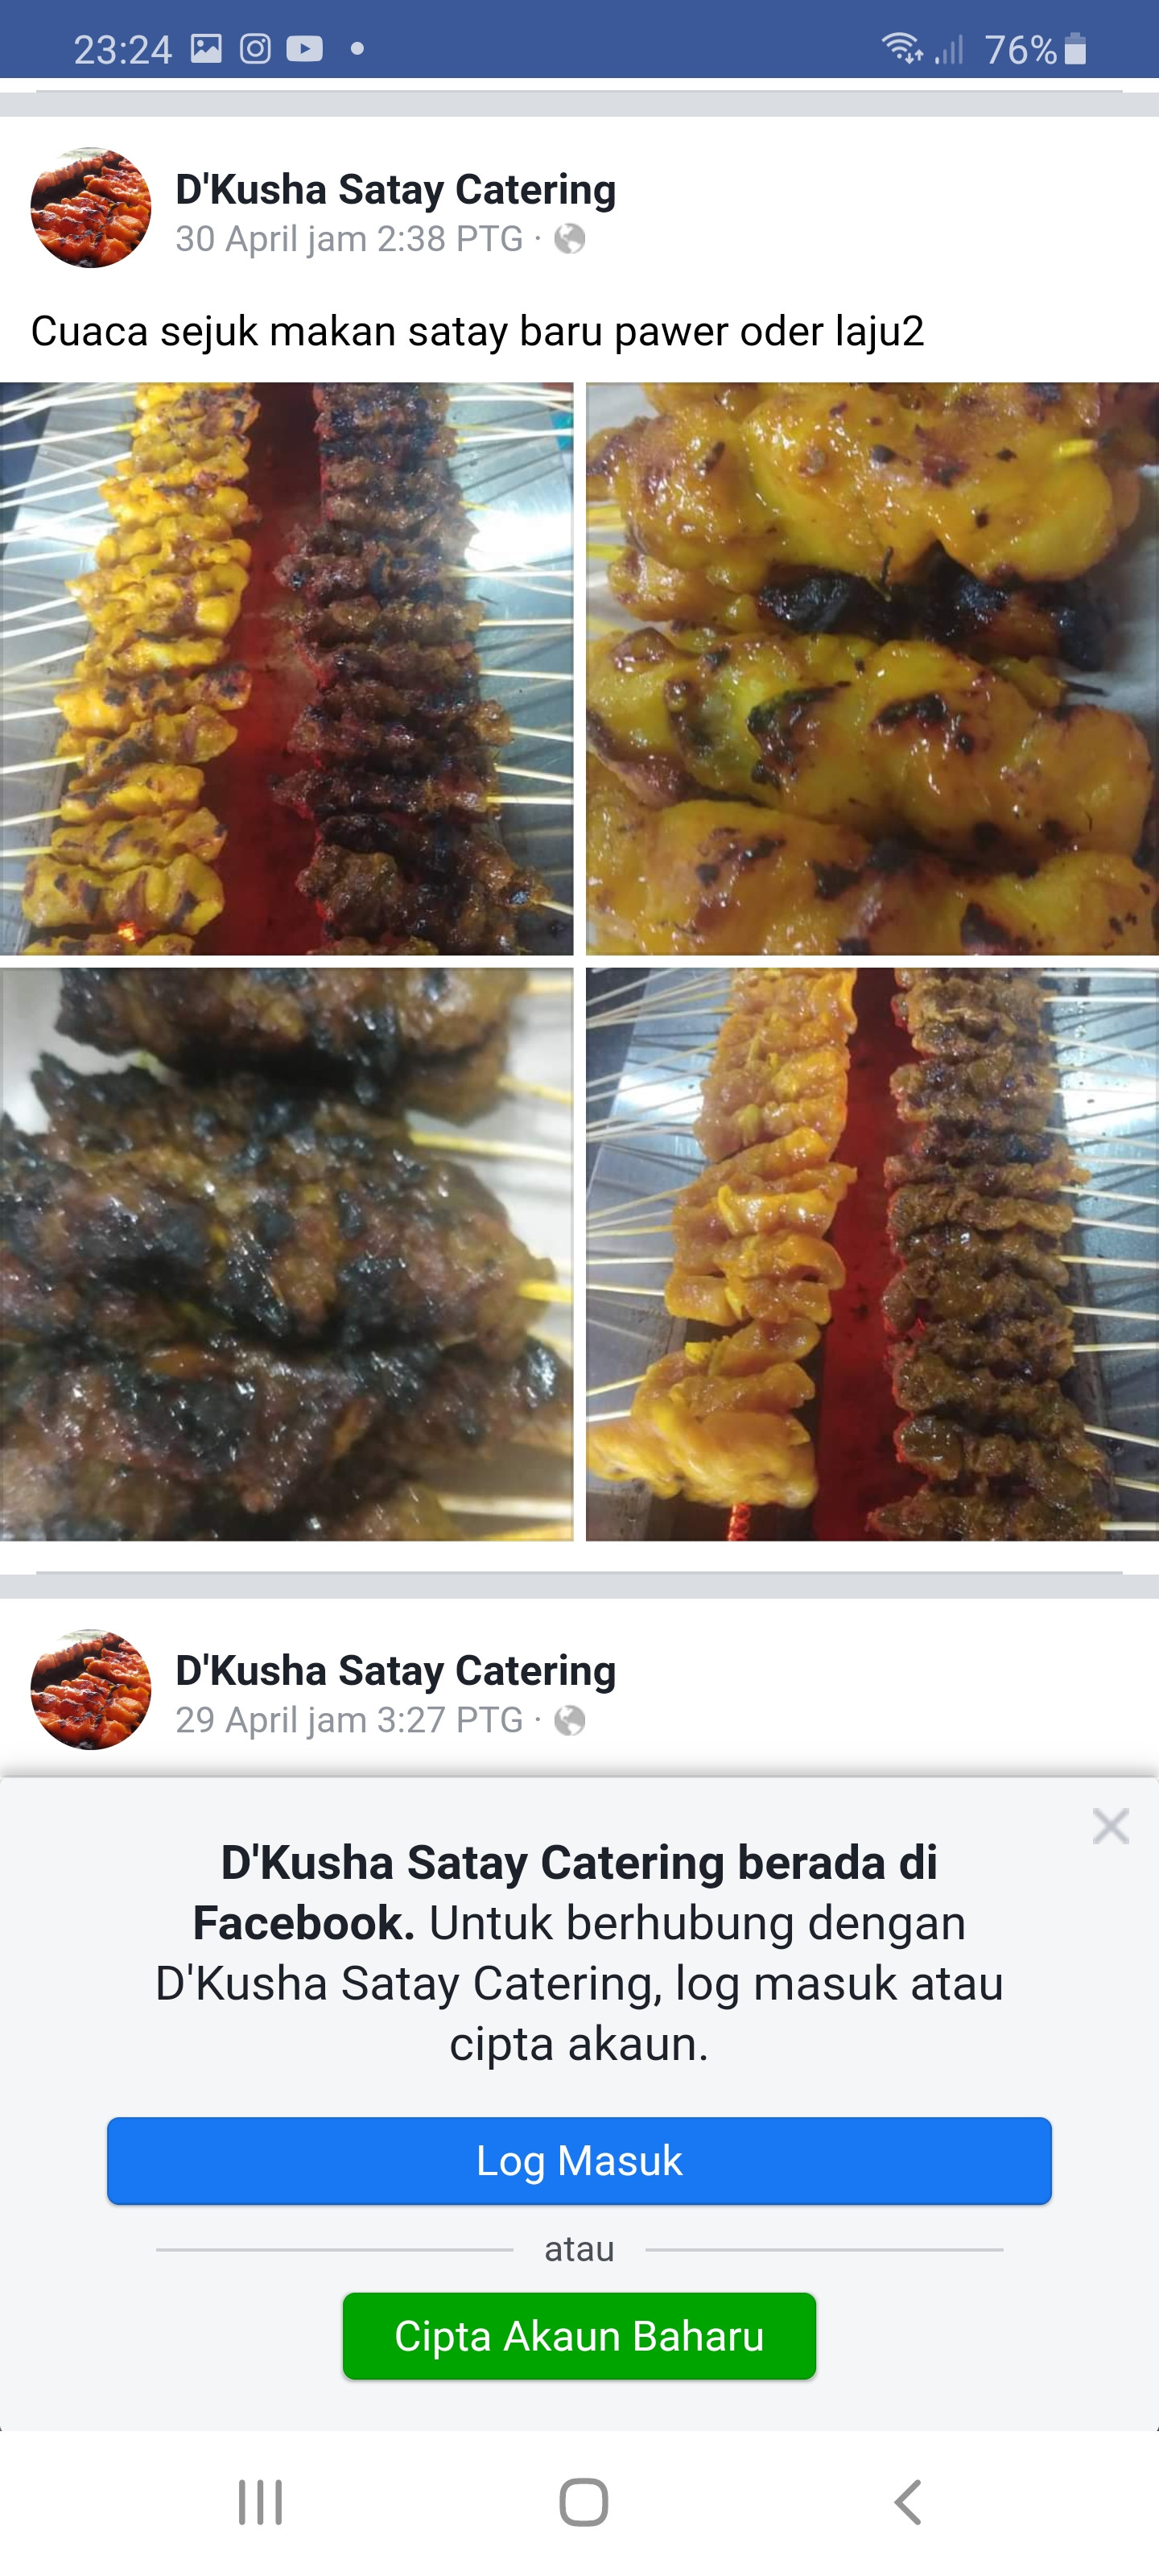 d'Kusha Satay Catering